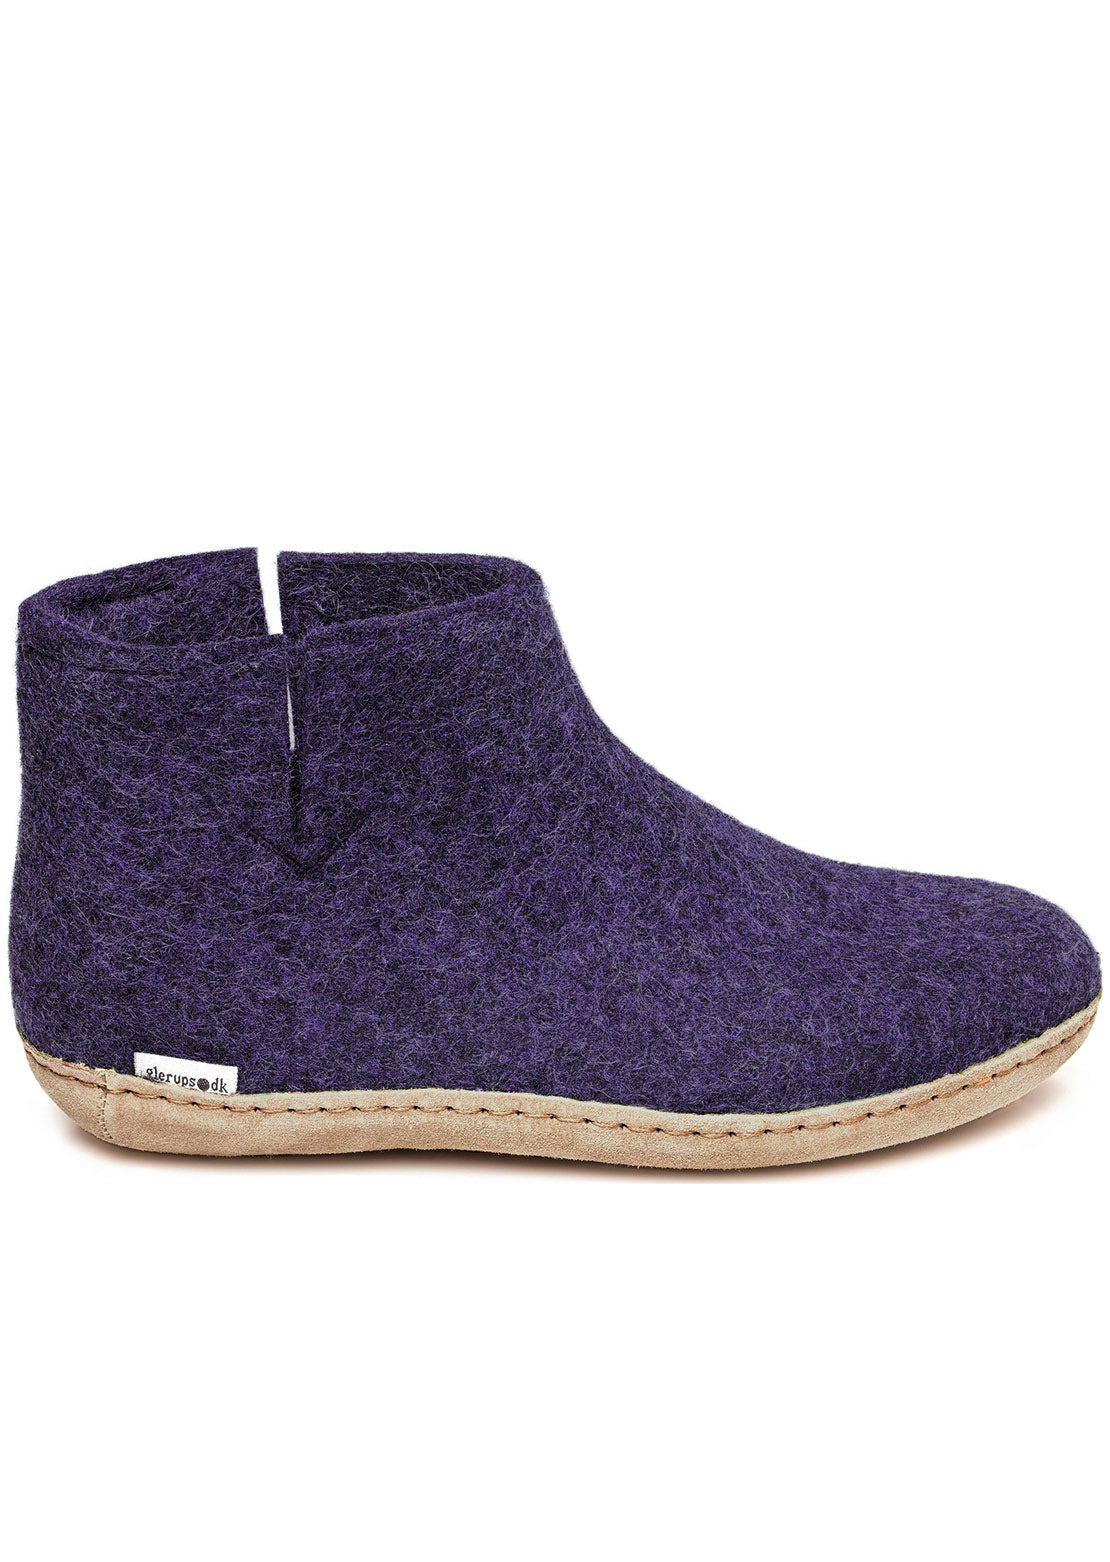 Glerups Unisex Leather Sole Boots Purple